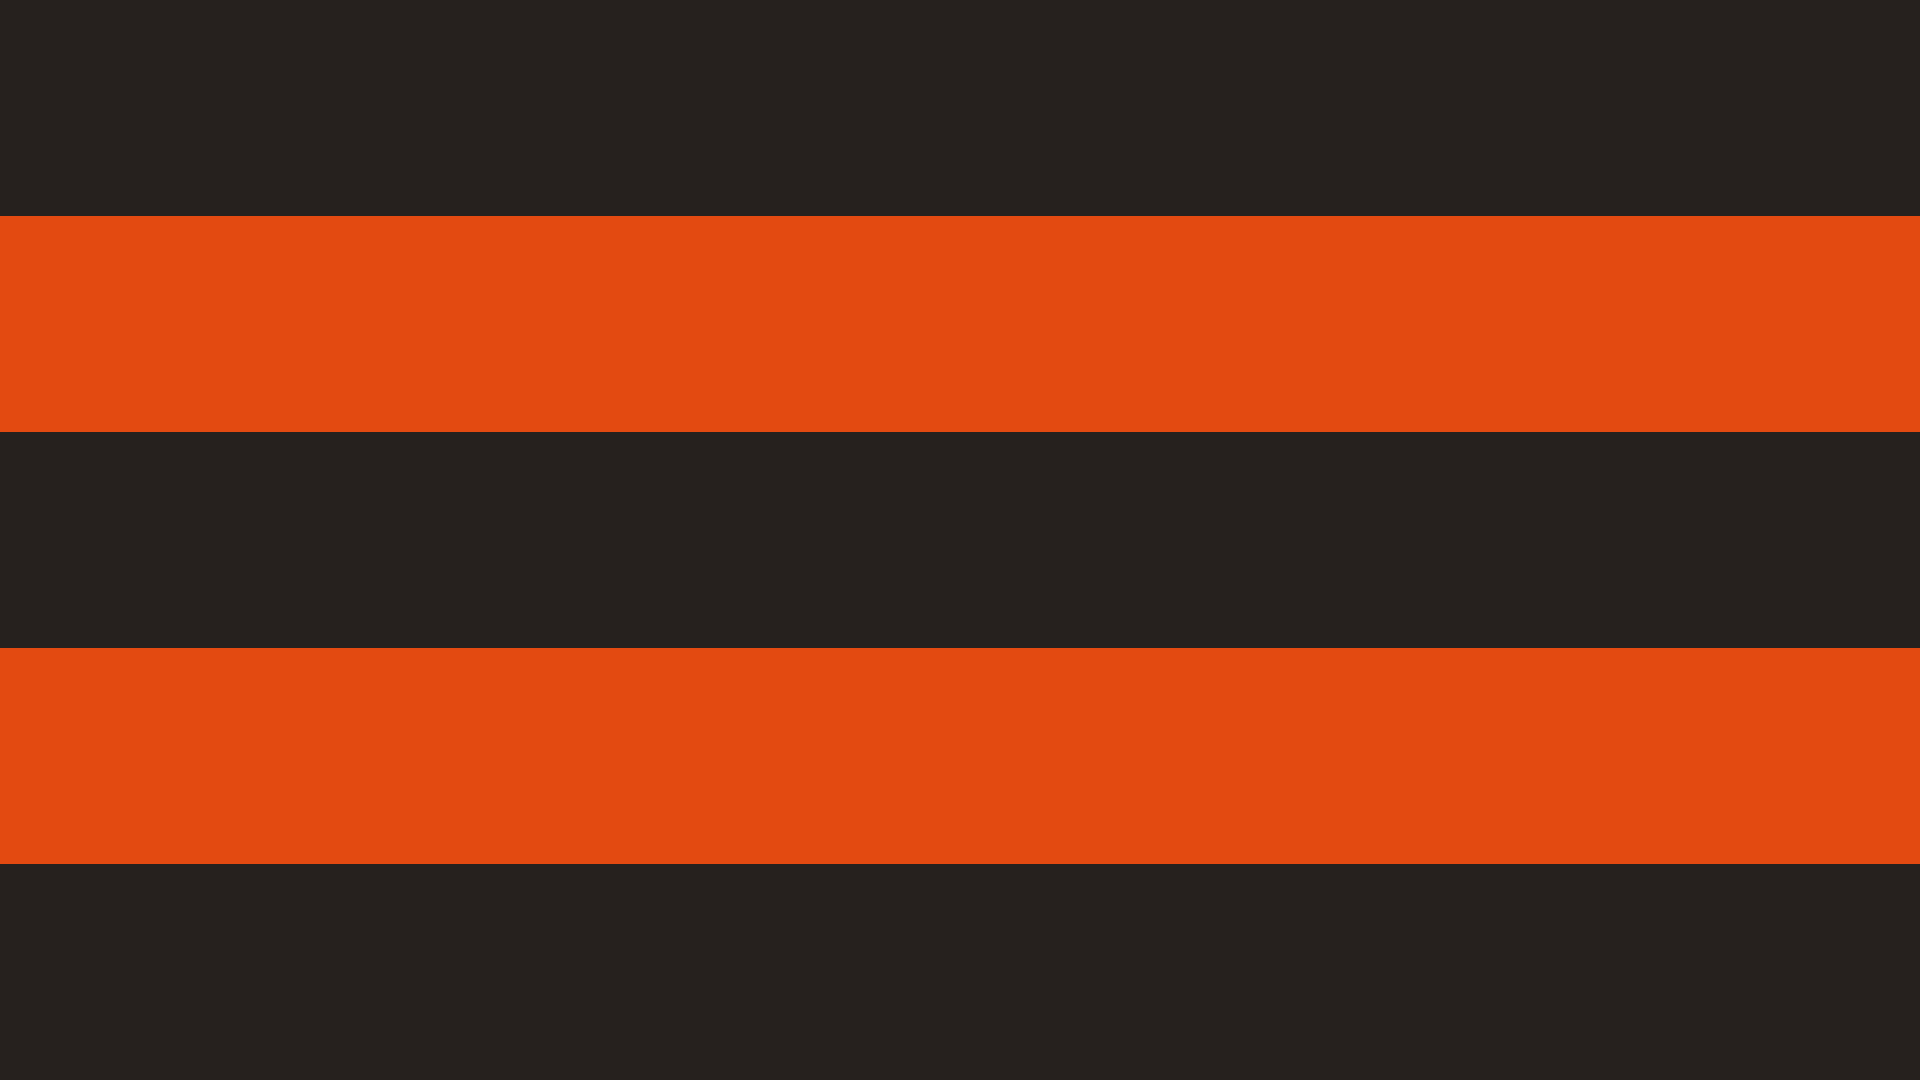 Horizontal Orange And Black Stripes Picture